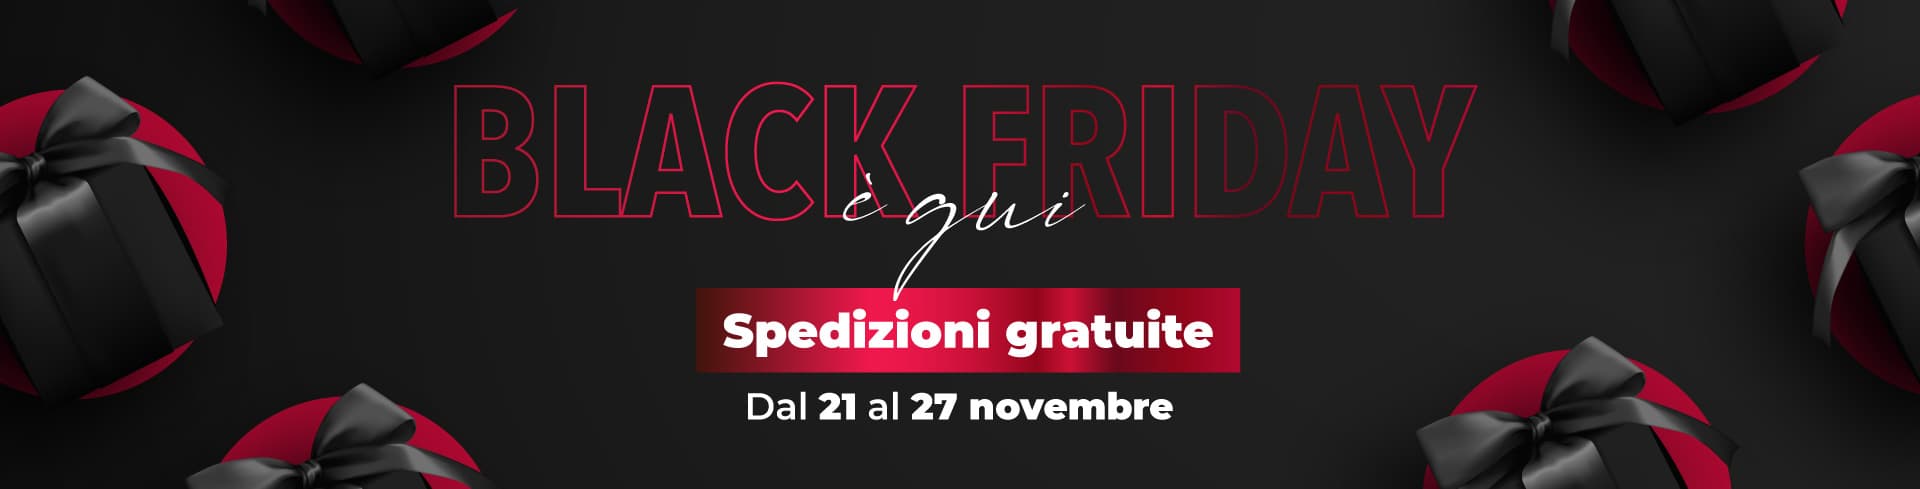 banner promozionale Black Friday desktop